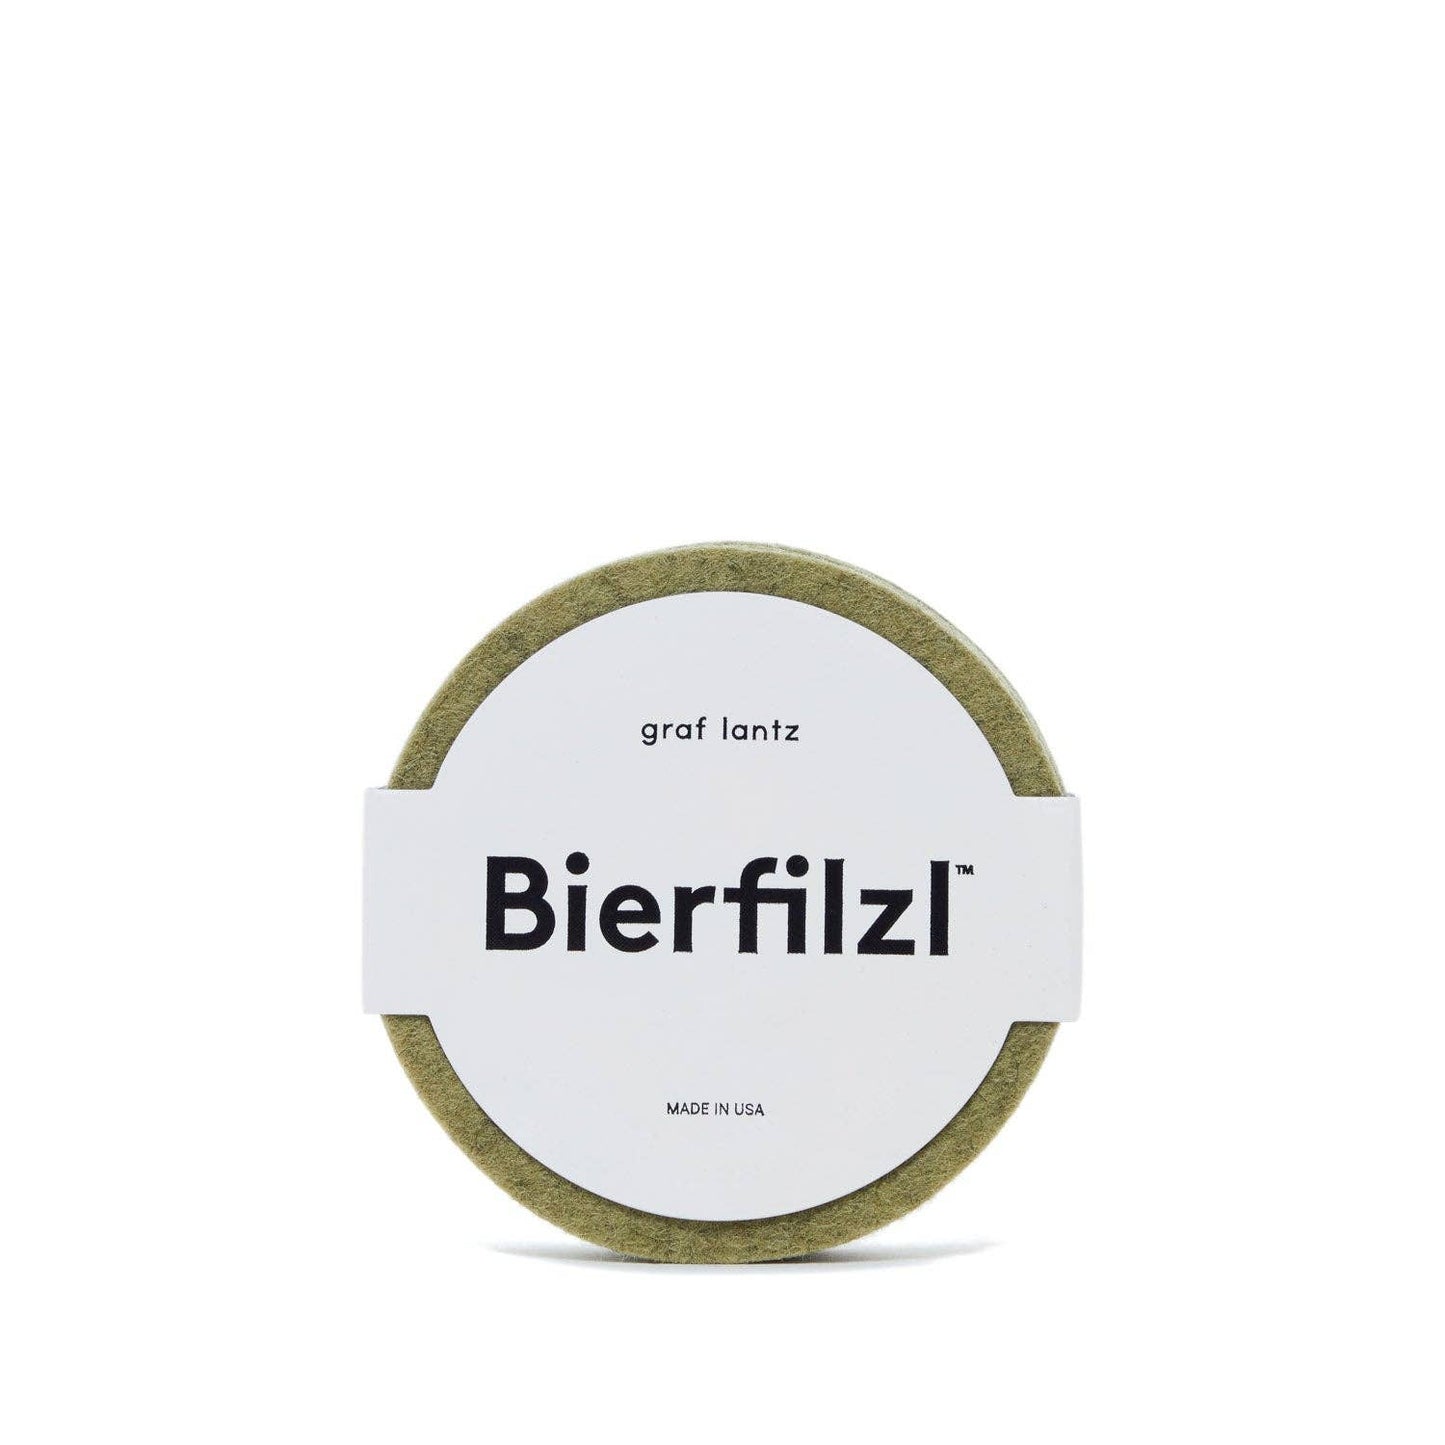 Bierfilzl Merino Wool Felt Round Coaster Solid 4 Pack - Sage